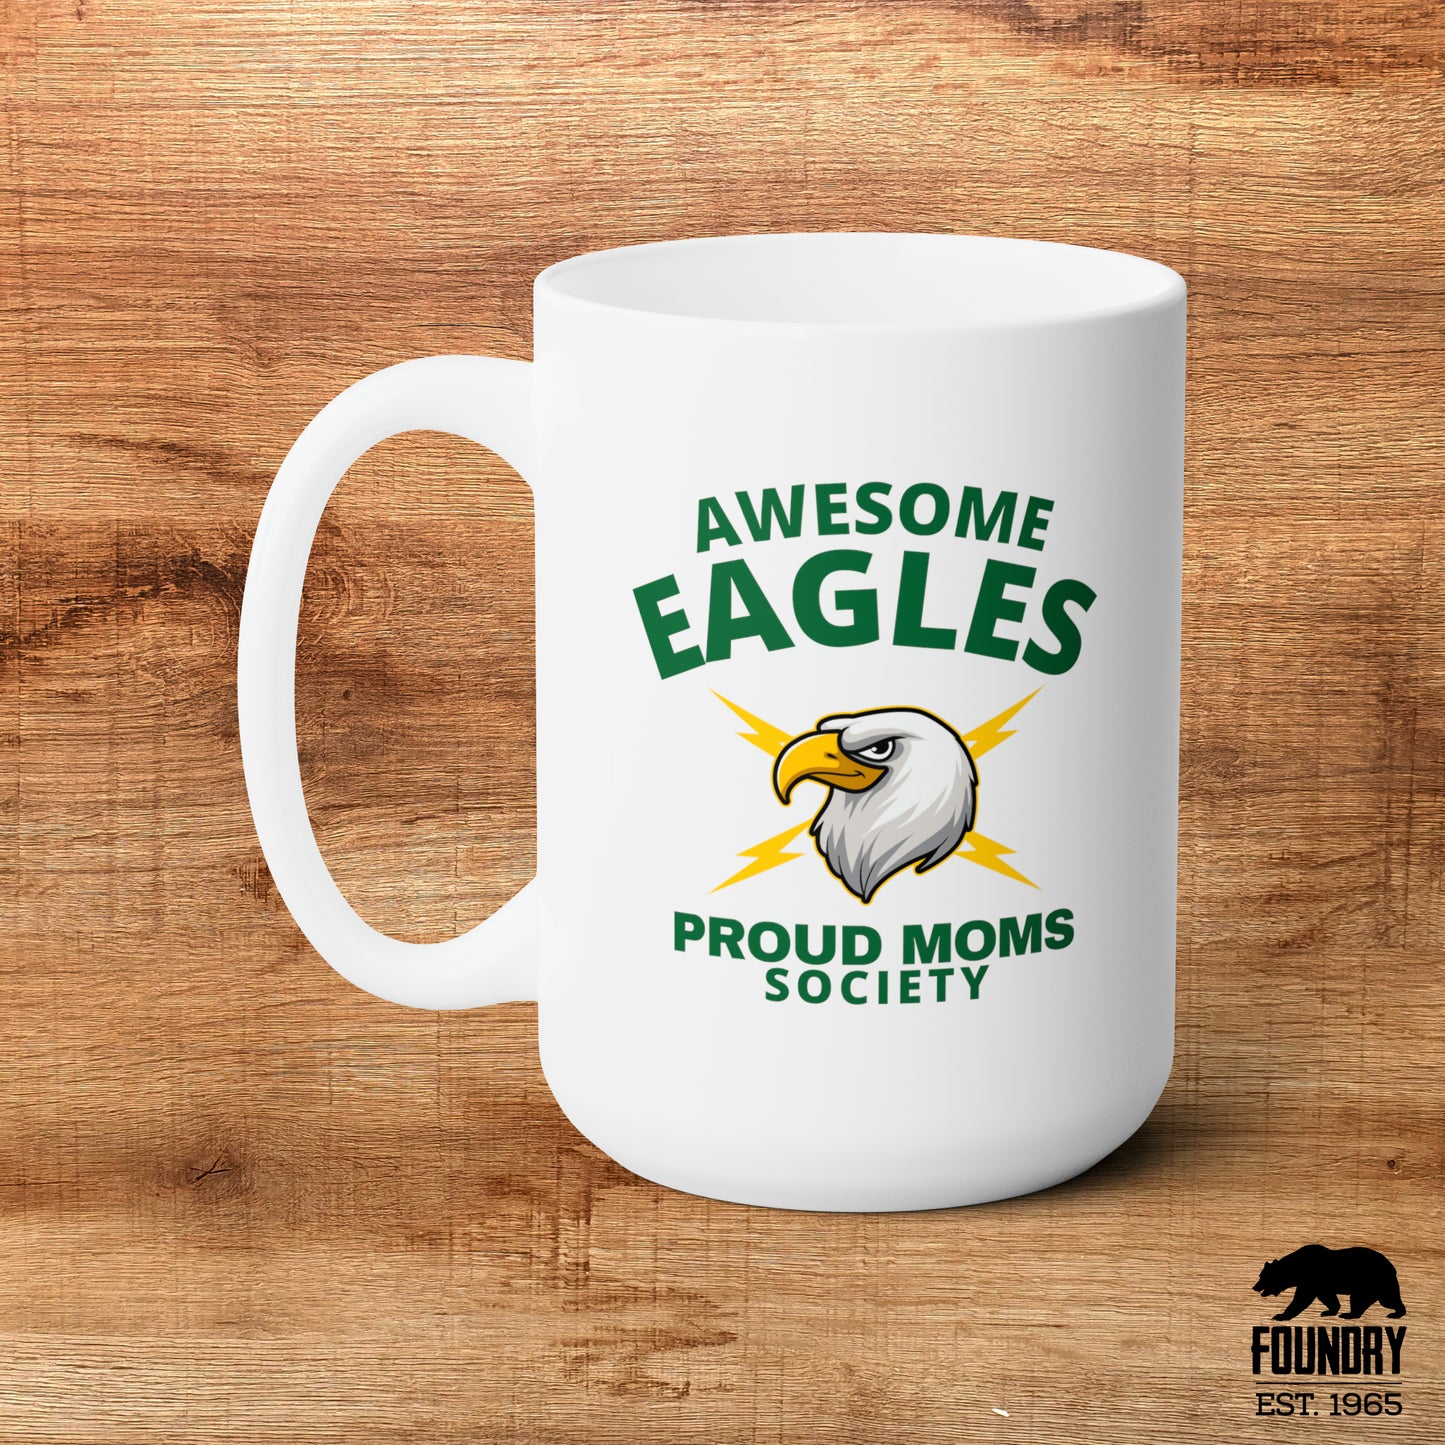 Awesome Eagles Proud Moms Society - Ceramic Mug 15oz